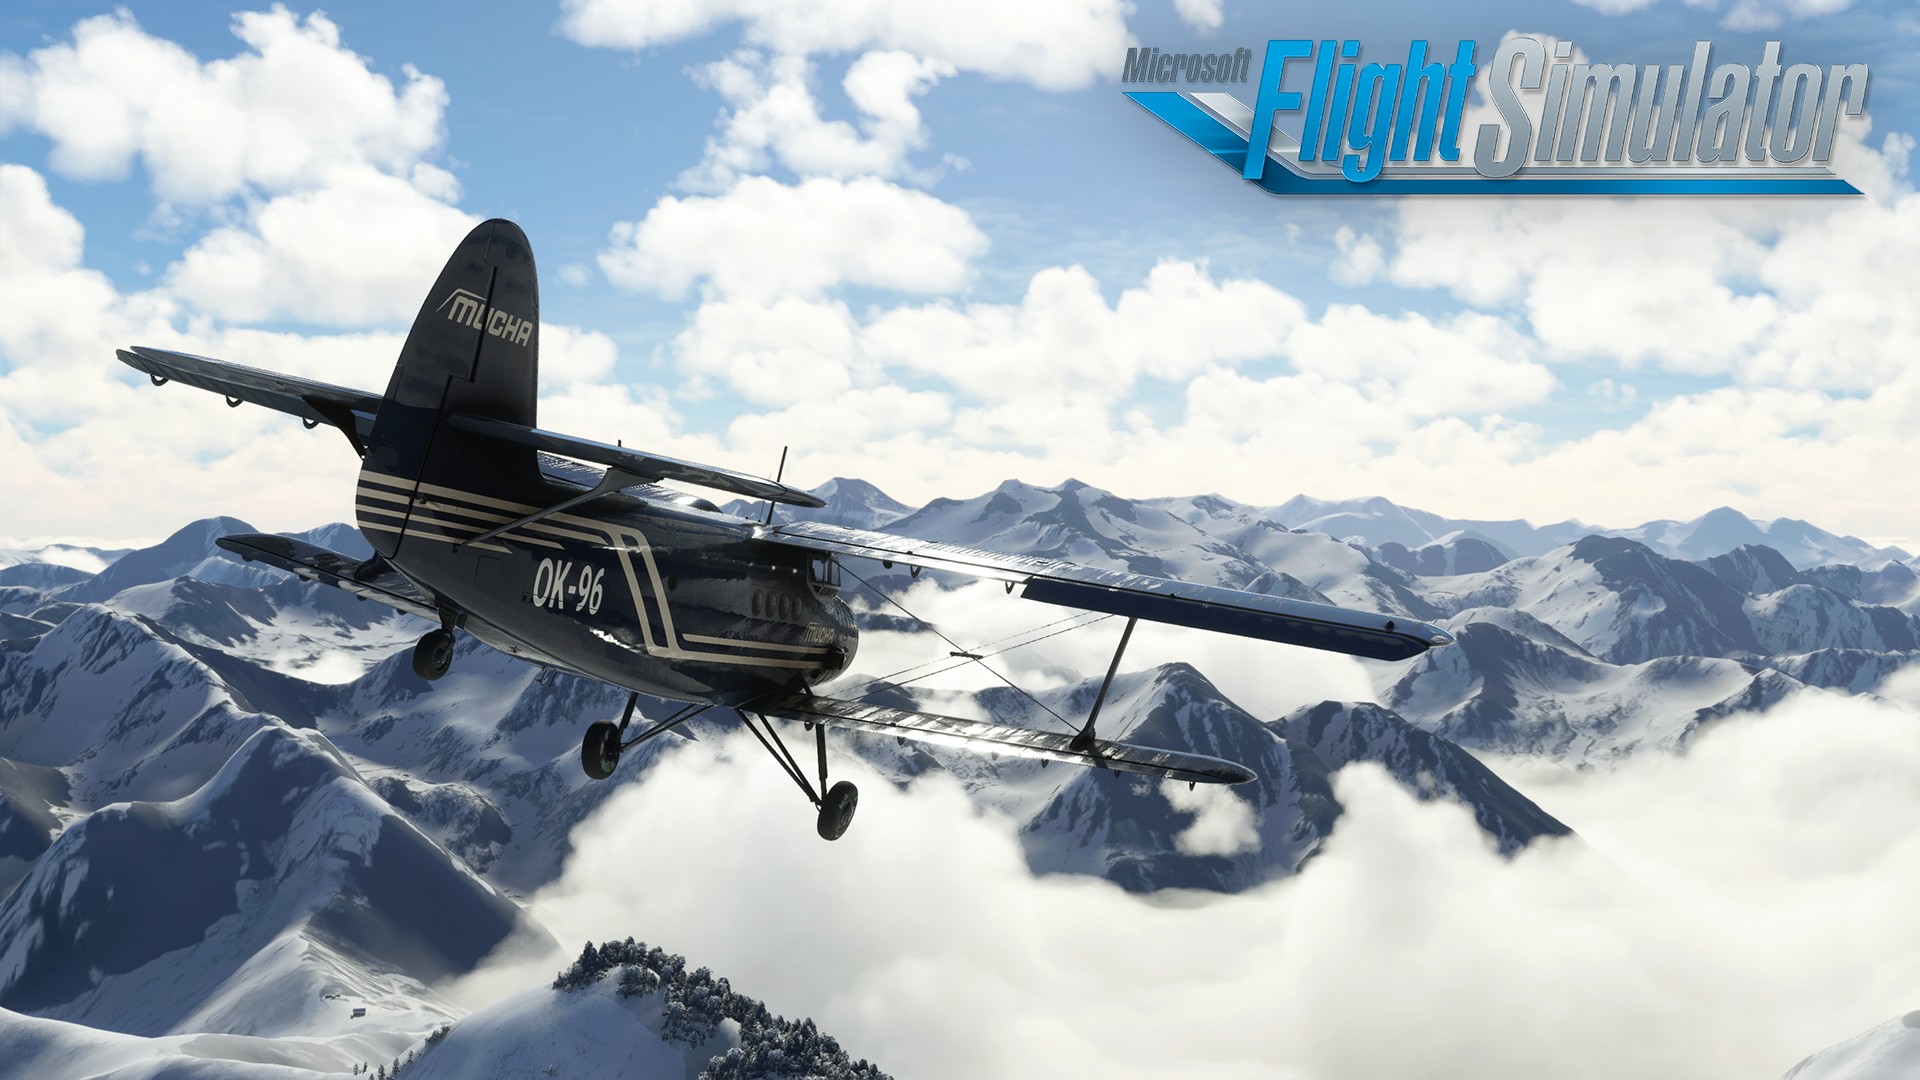 Microsoft Flight Simulator Releases the Highly Versatile Antonov